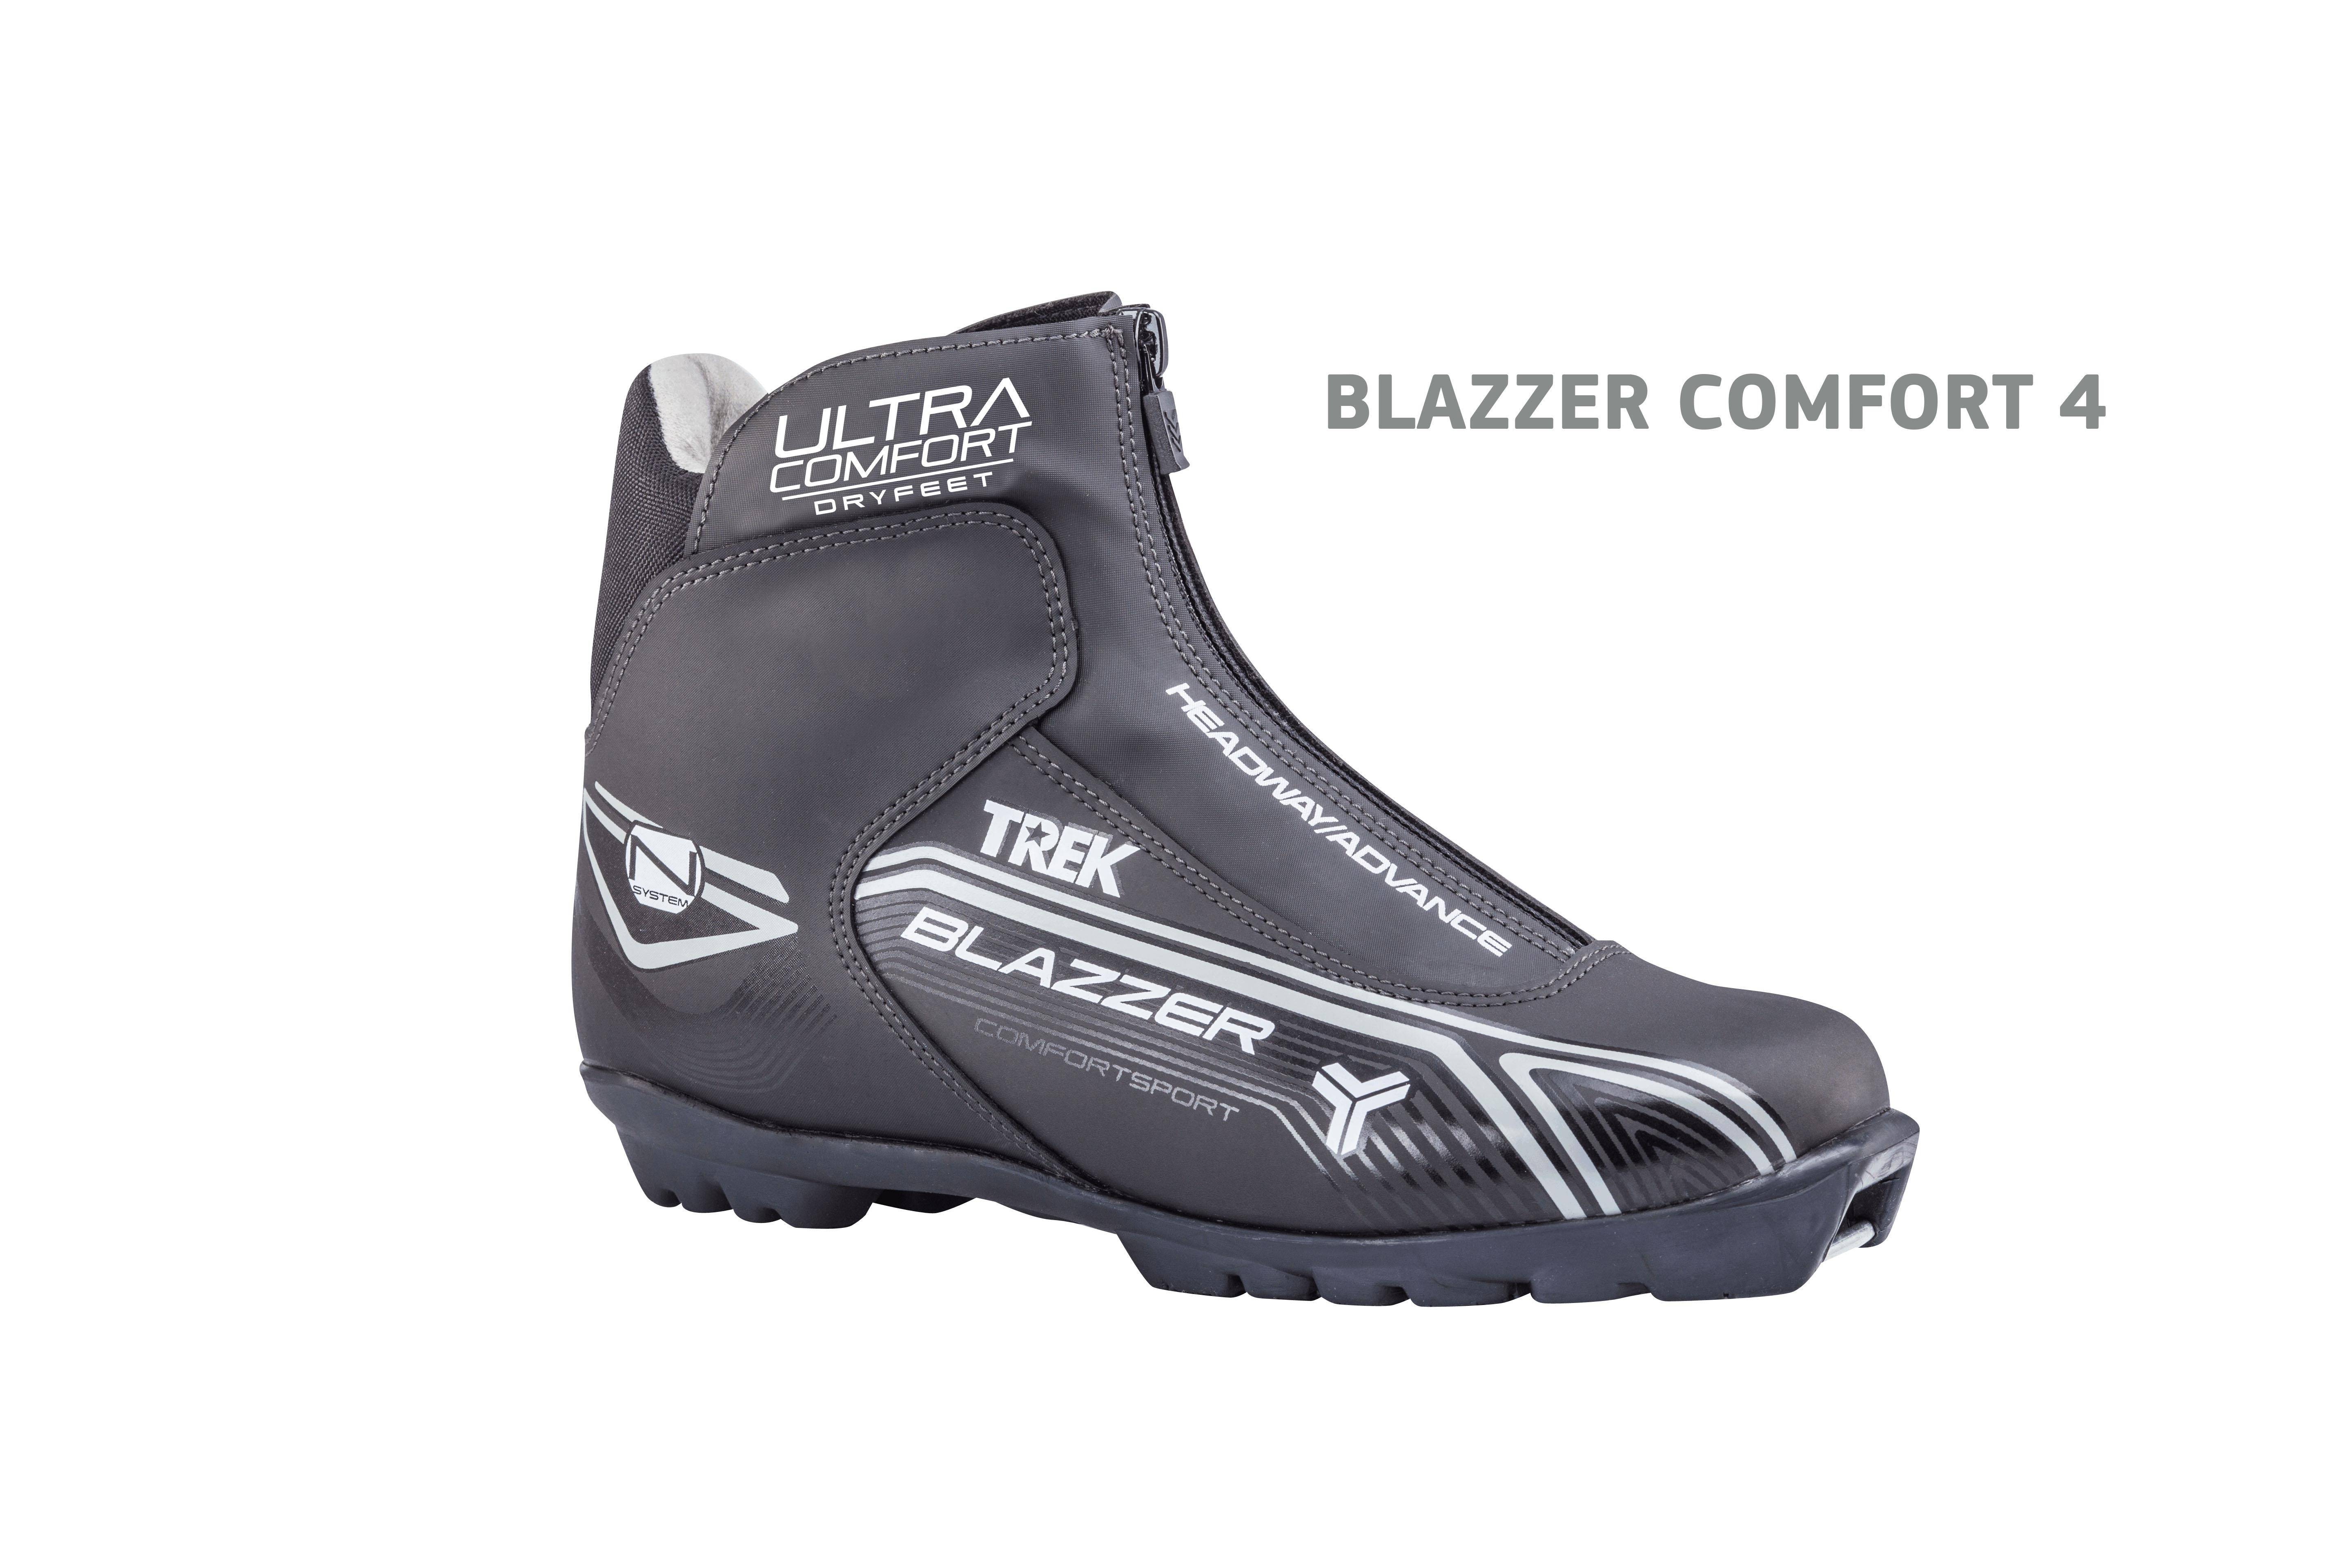 Blazzer Comfort4 NNN  ботинки лыжные